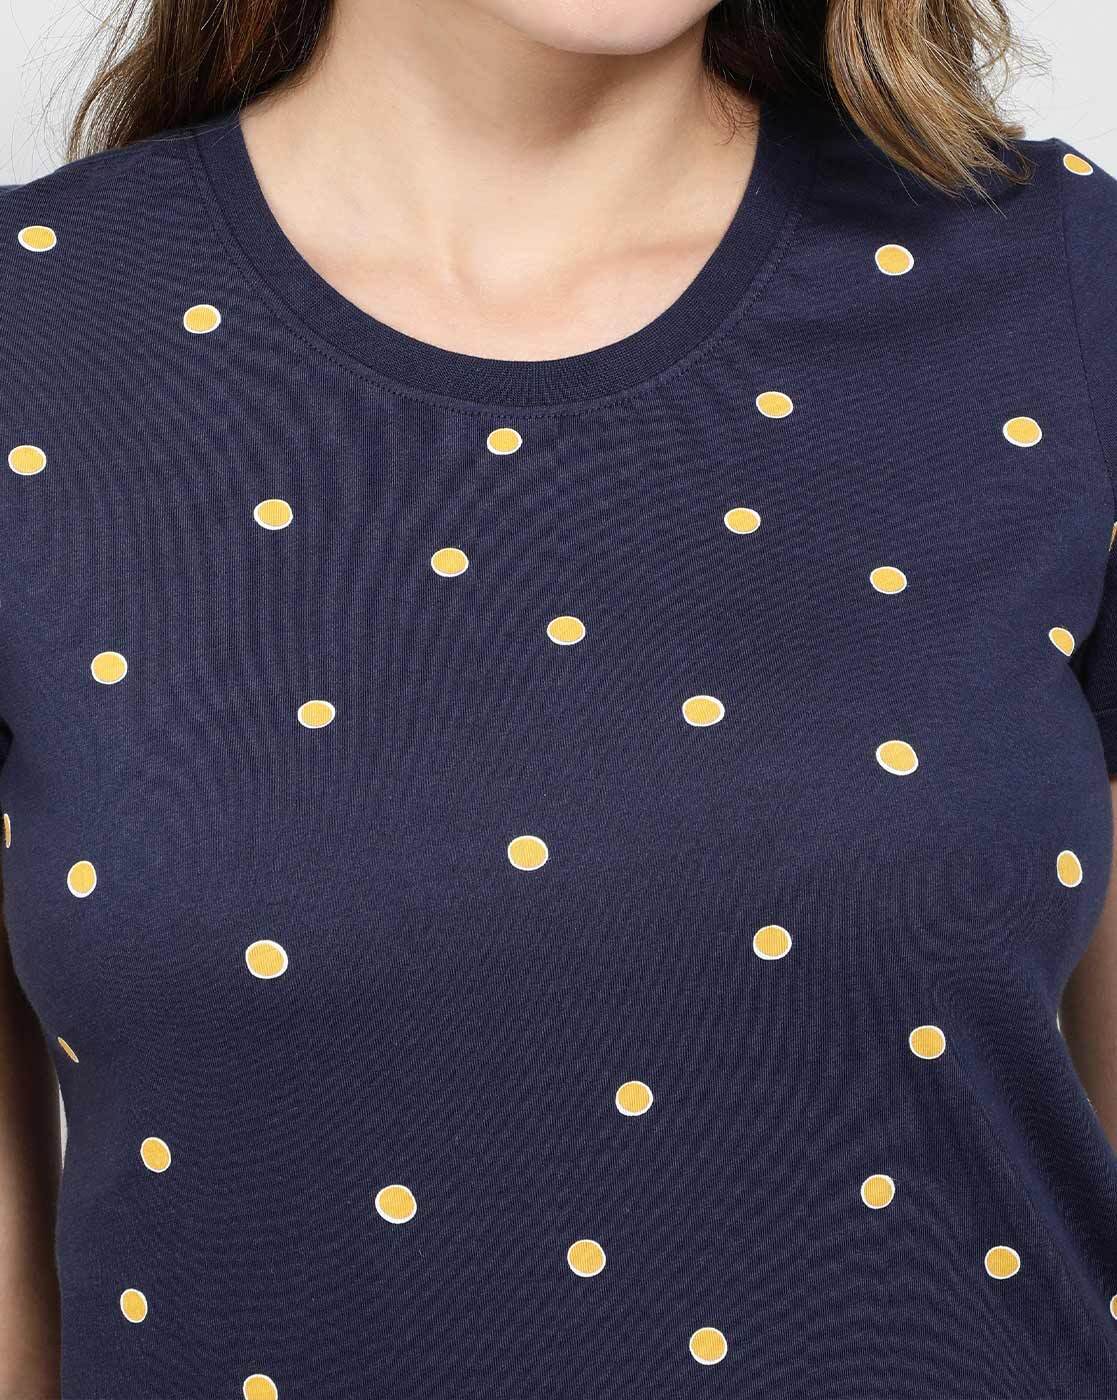 Buy Navy Tshirts for Women by JOCKEY Online